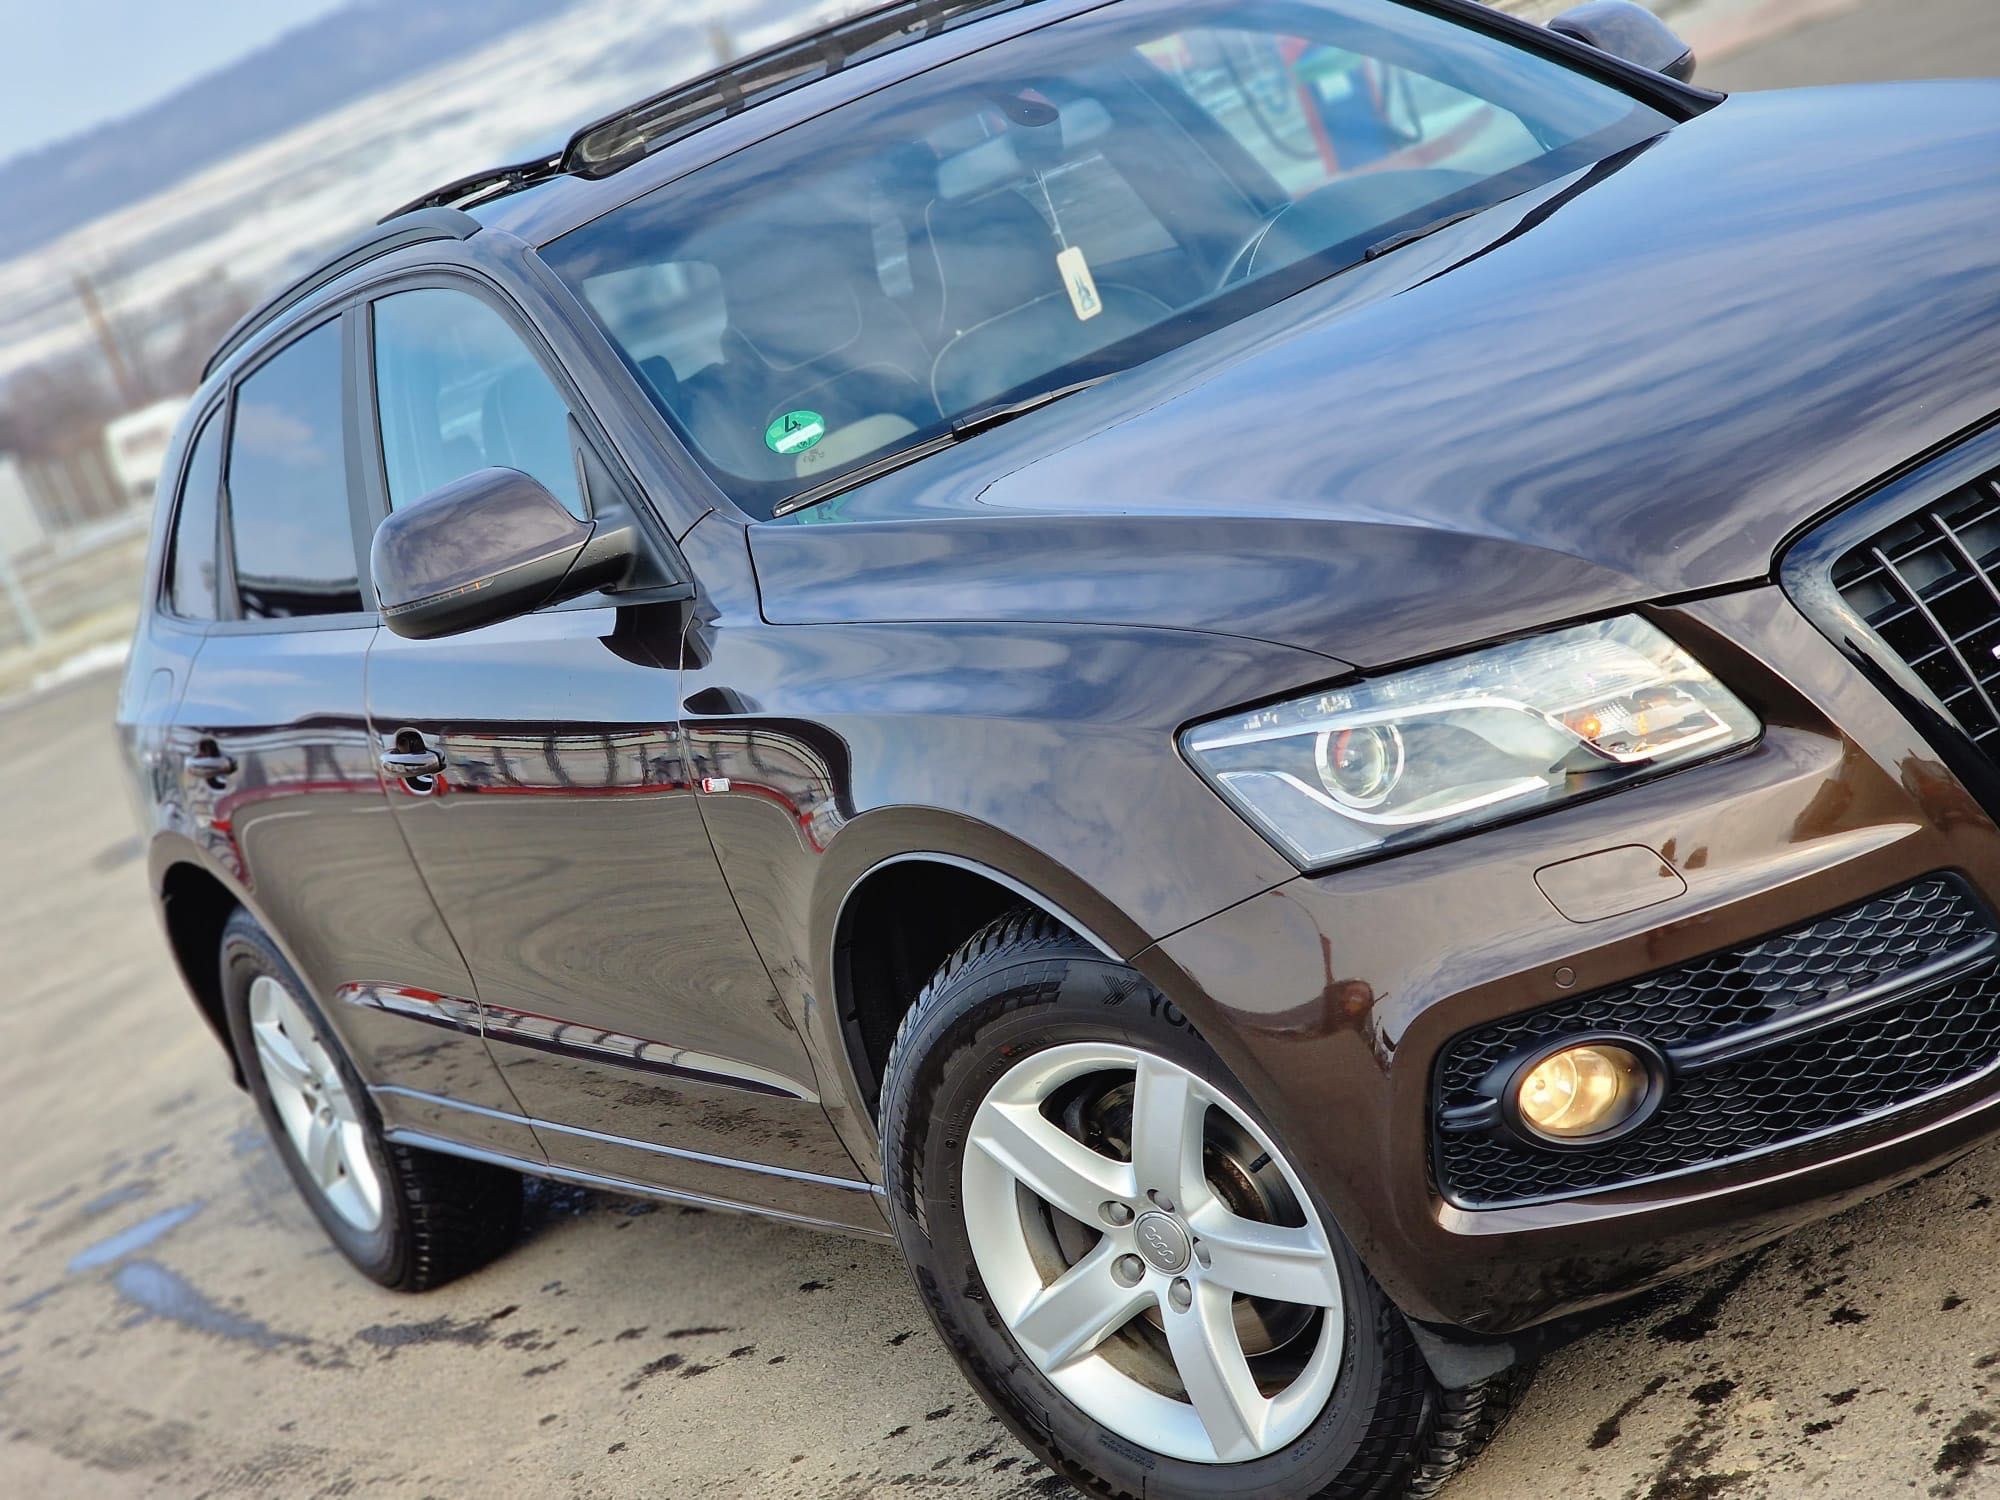 Audi q5 2011 înmatriculat recent